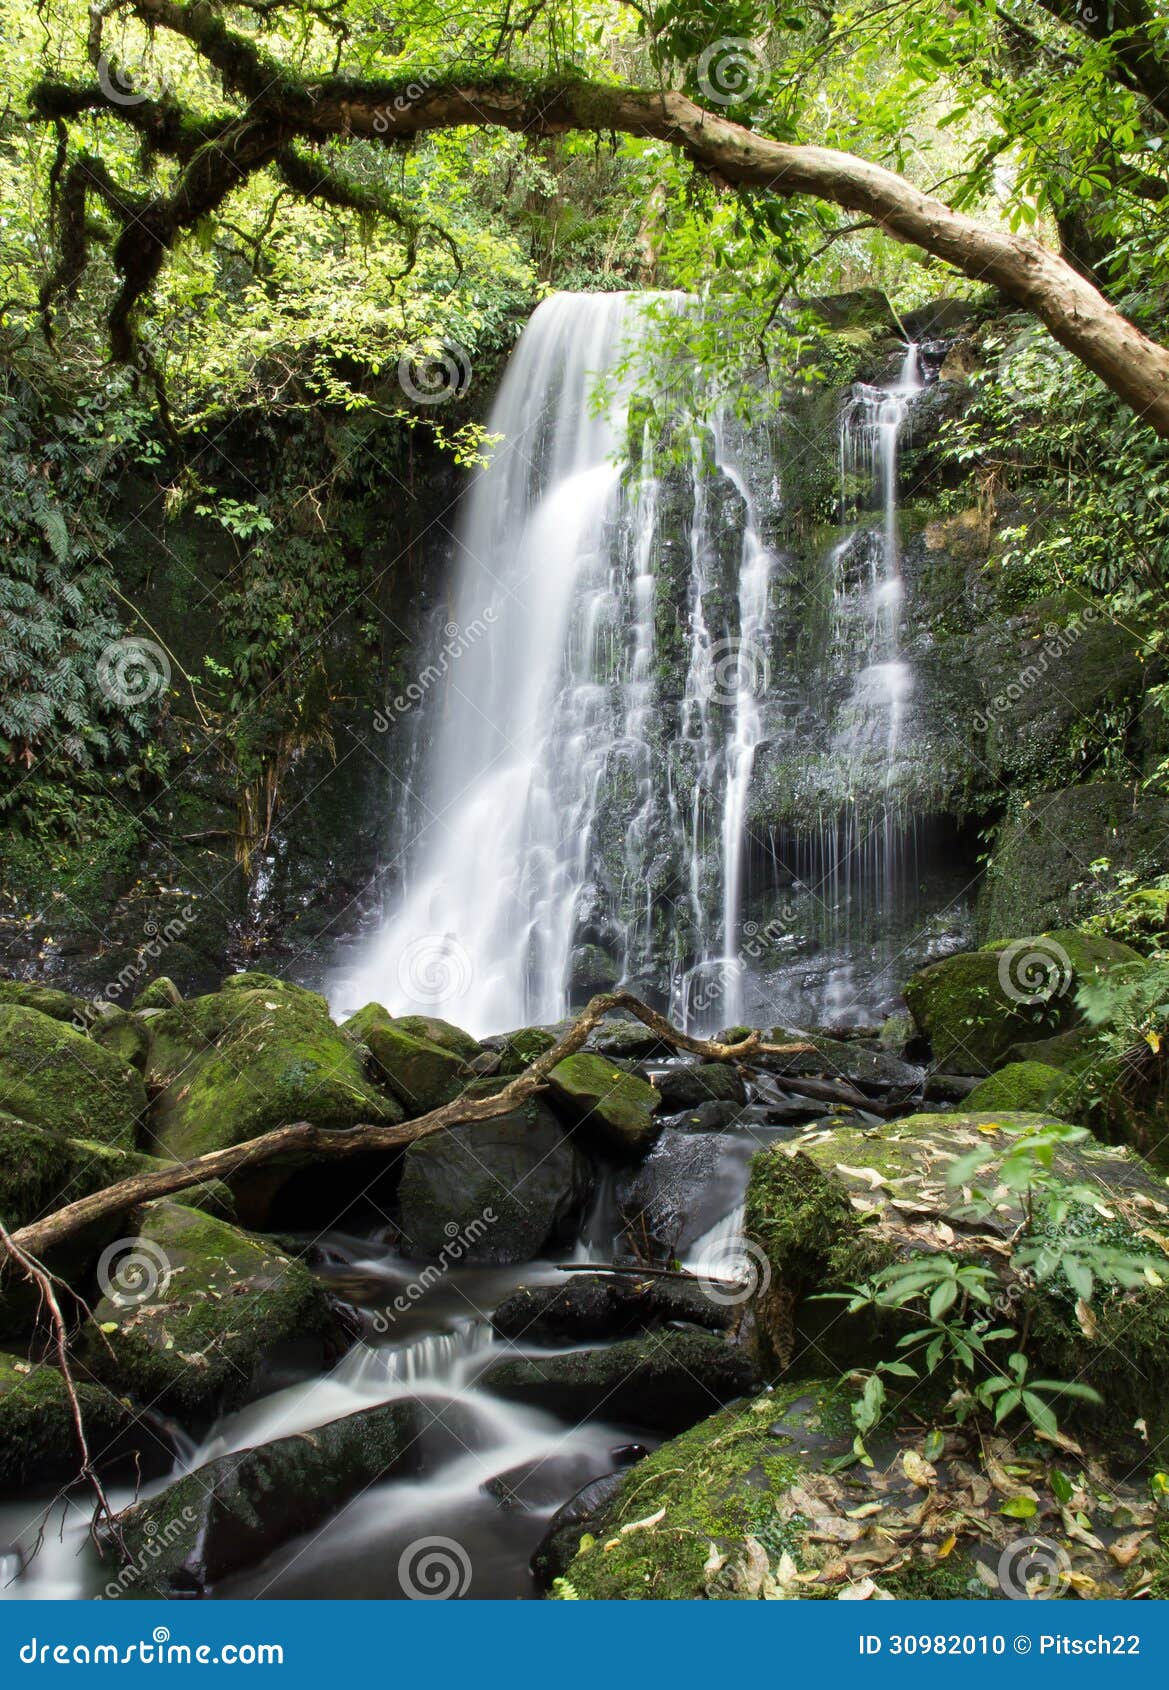 Matai Falls Stock Photos - Free & Royalty-Free Stock Photos from Dreamstime